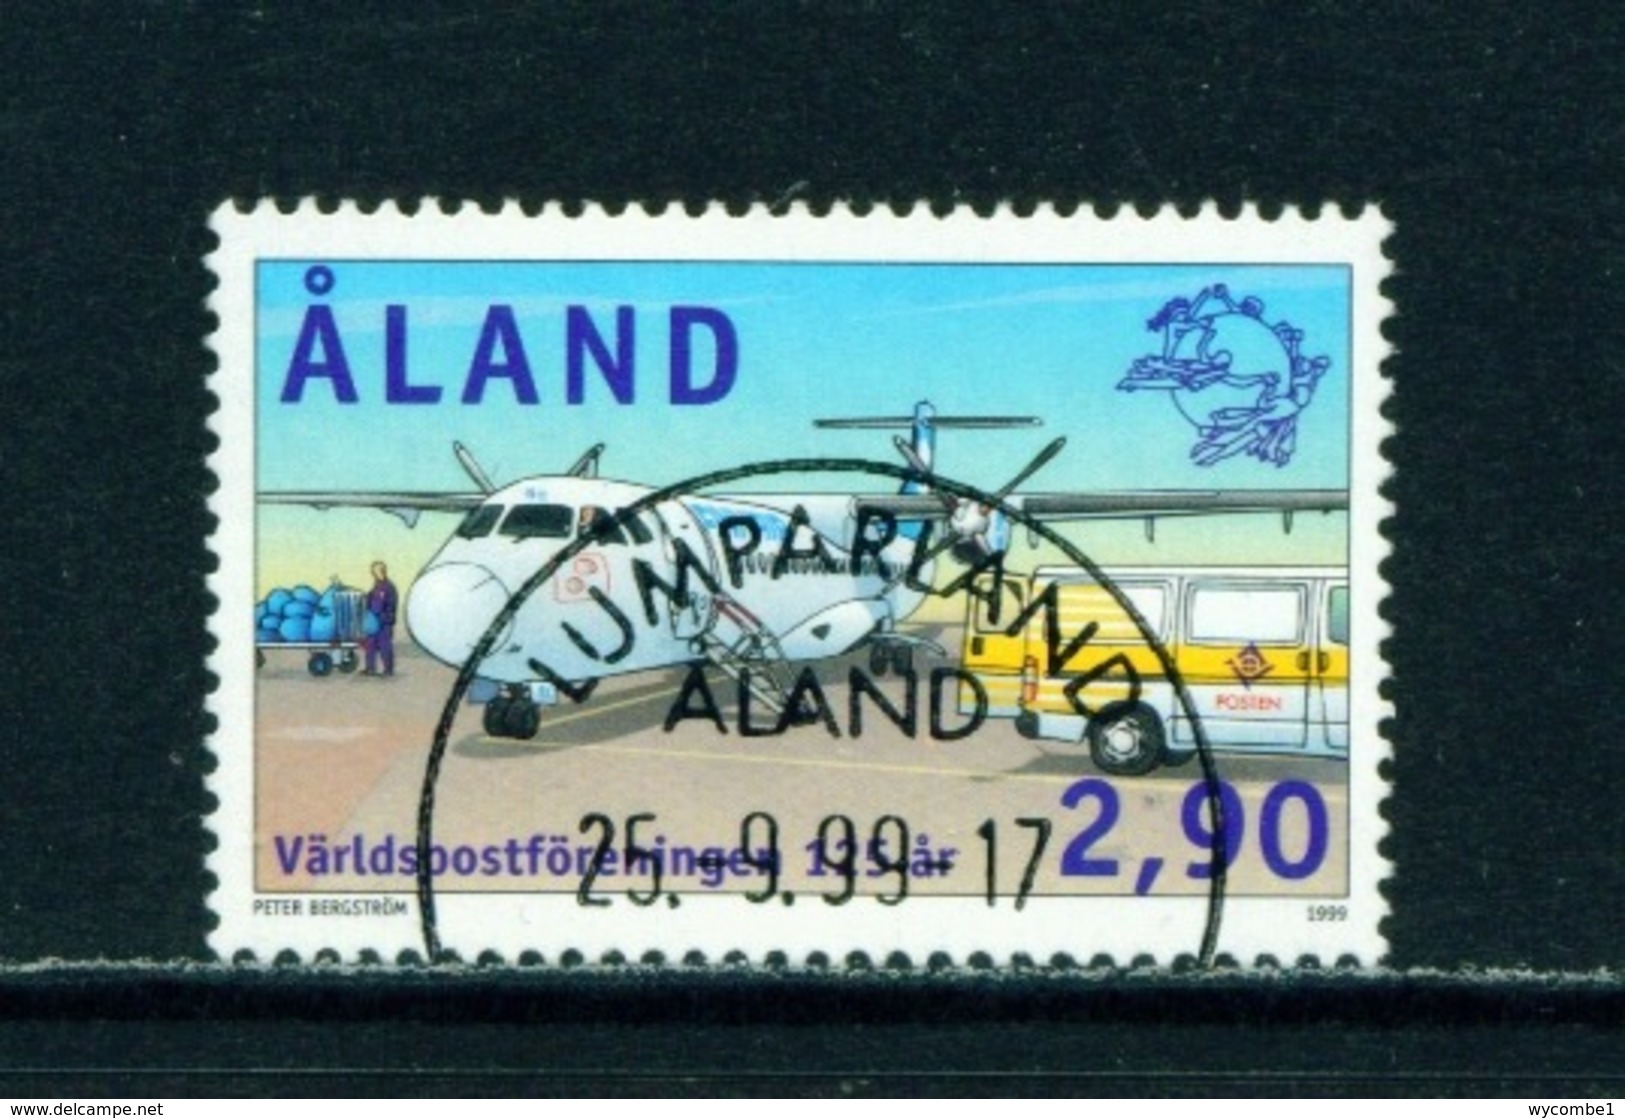 ALAND  -  1999 UPU 2m90 Used As Scan - Aland